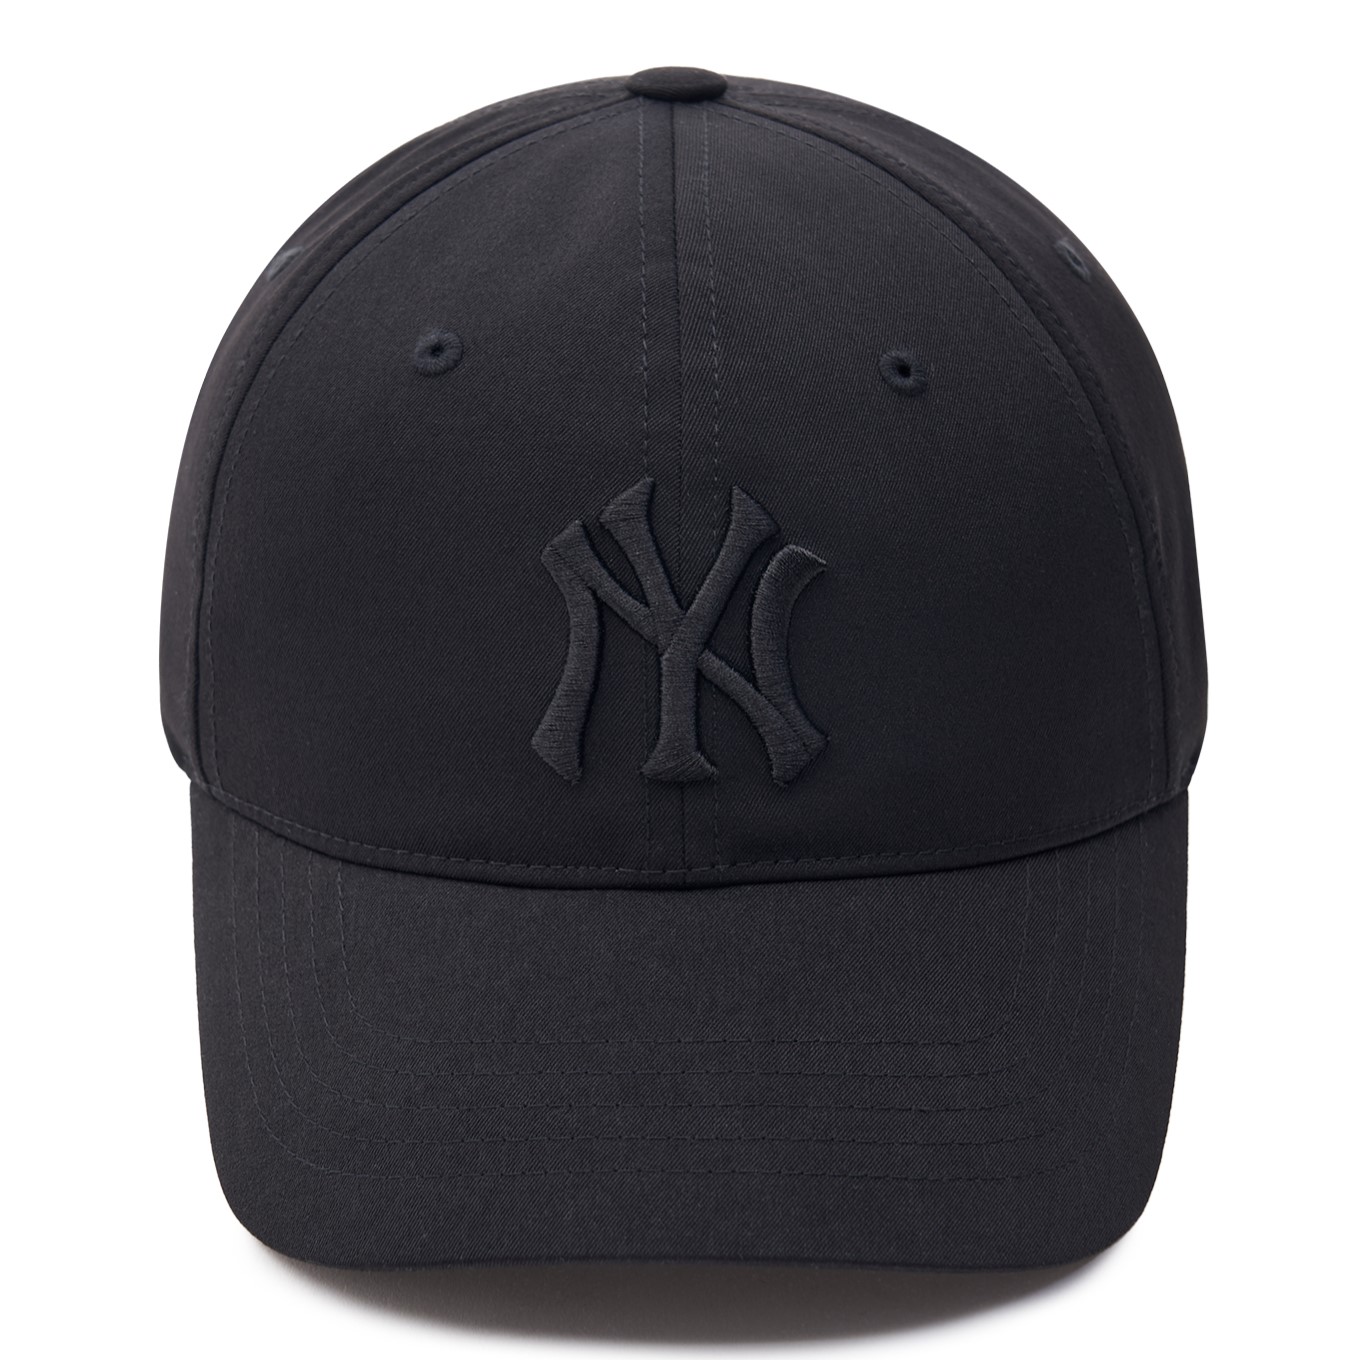 MŨ LƯỠI TRAI MLB NY FIELDER FIT FLEX UNSTRUCTURED BALL CAP NEW YORK YANKEES 3ACP0393N-50BKS 8